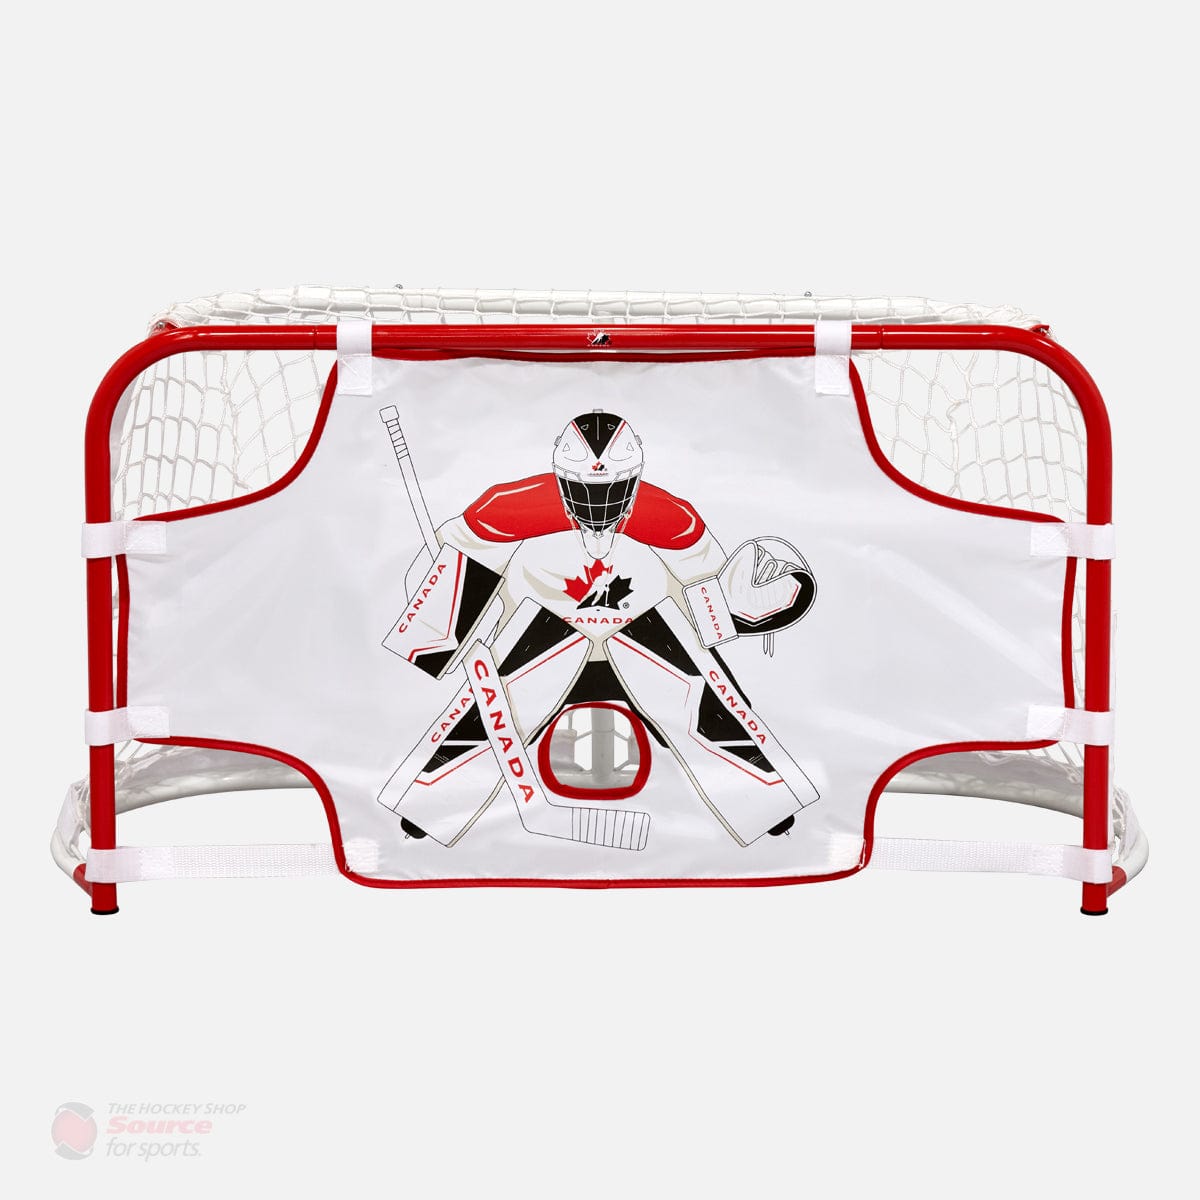 Hockey Canada Proform Quiknet Mini Hockey Net Set